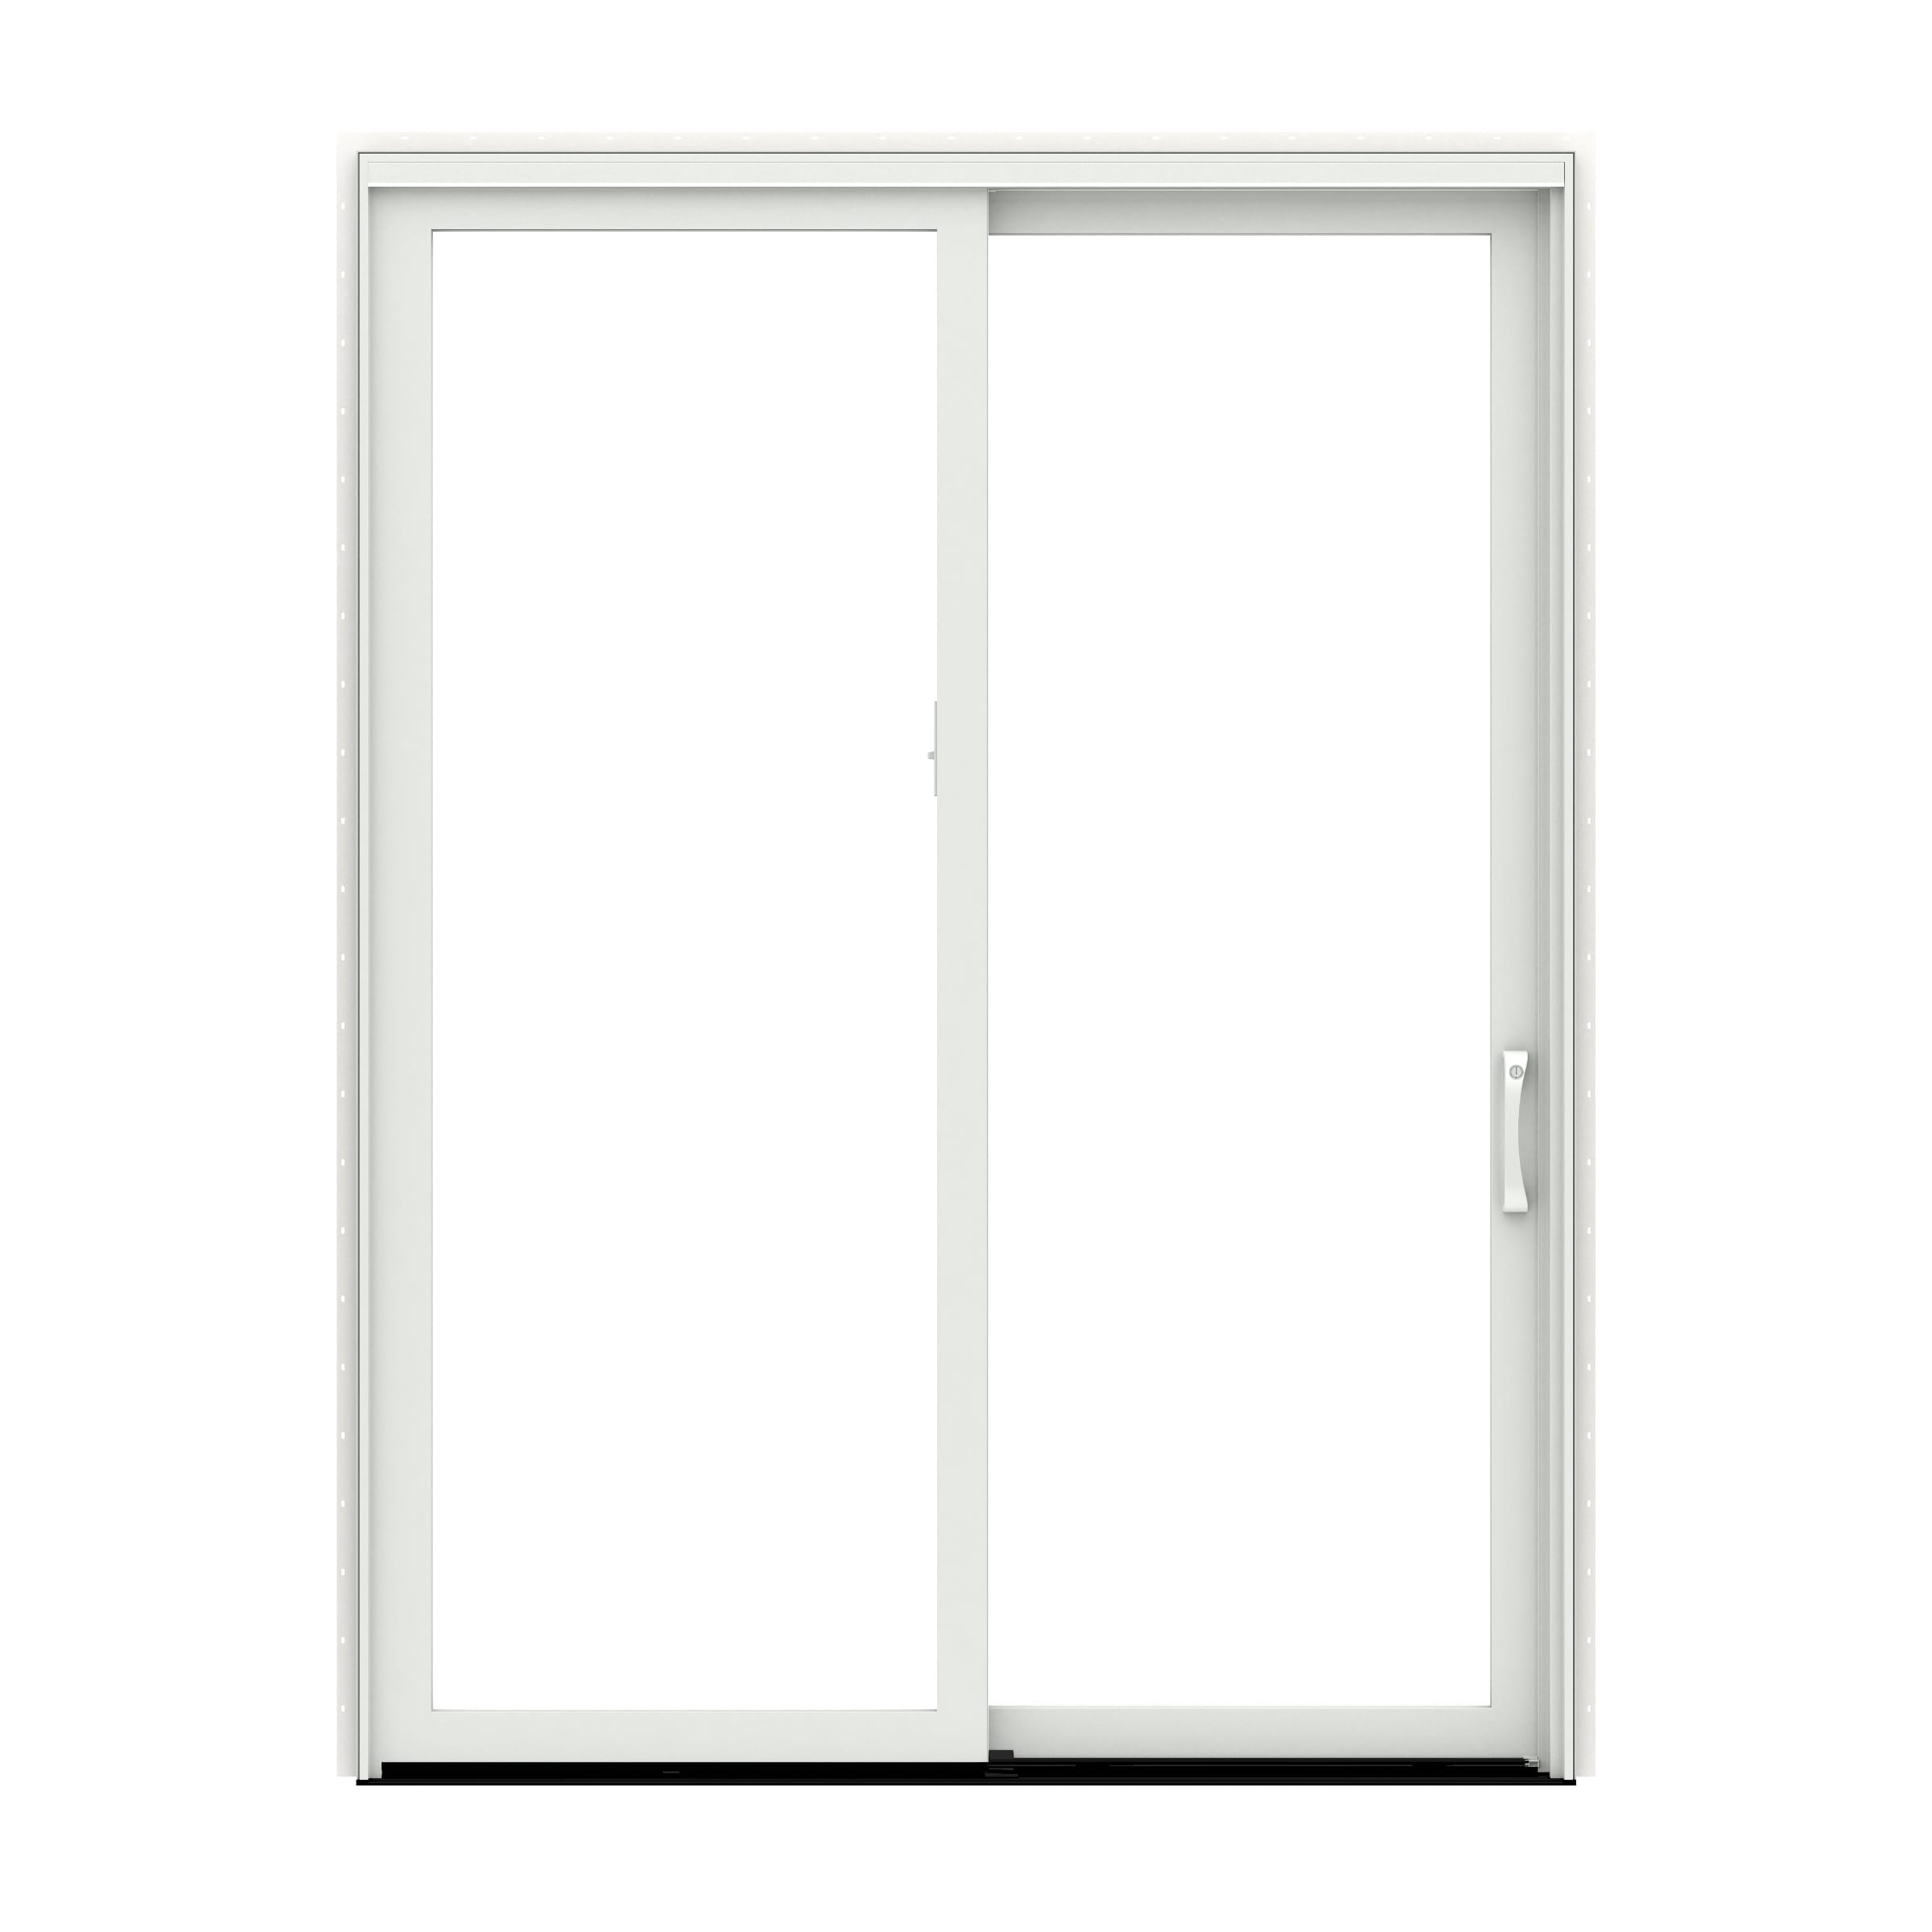 Impervia Series 72-in x 80-in Low-e Argon White Fiberglass Sliding Right-Hand Sliding Double Patio Door | - Pella 1000011490